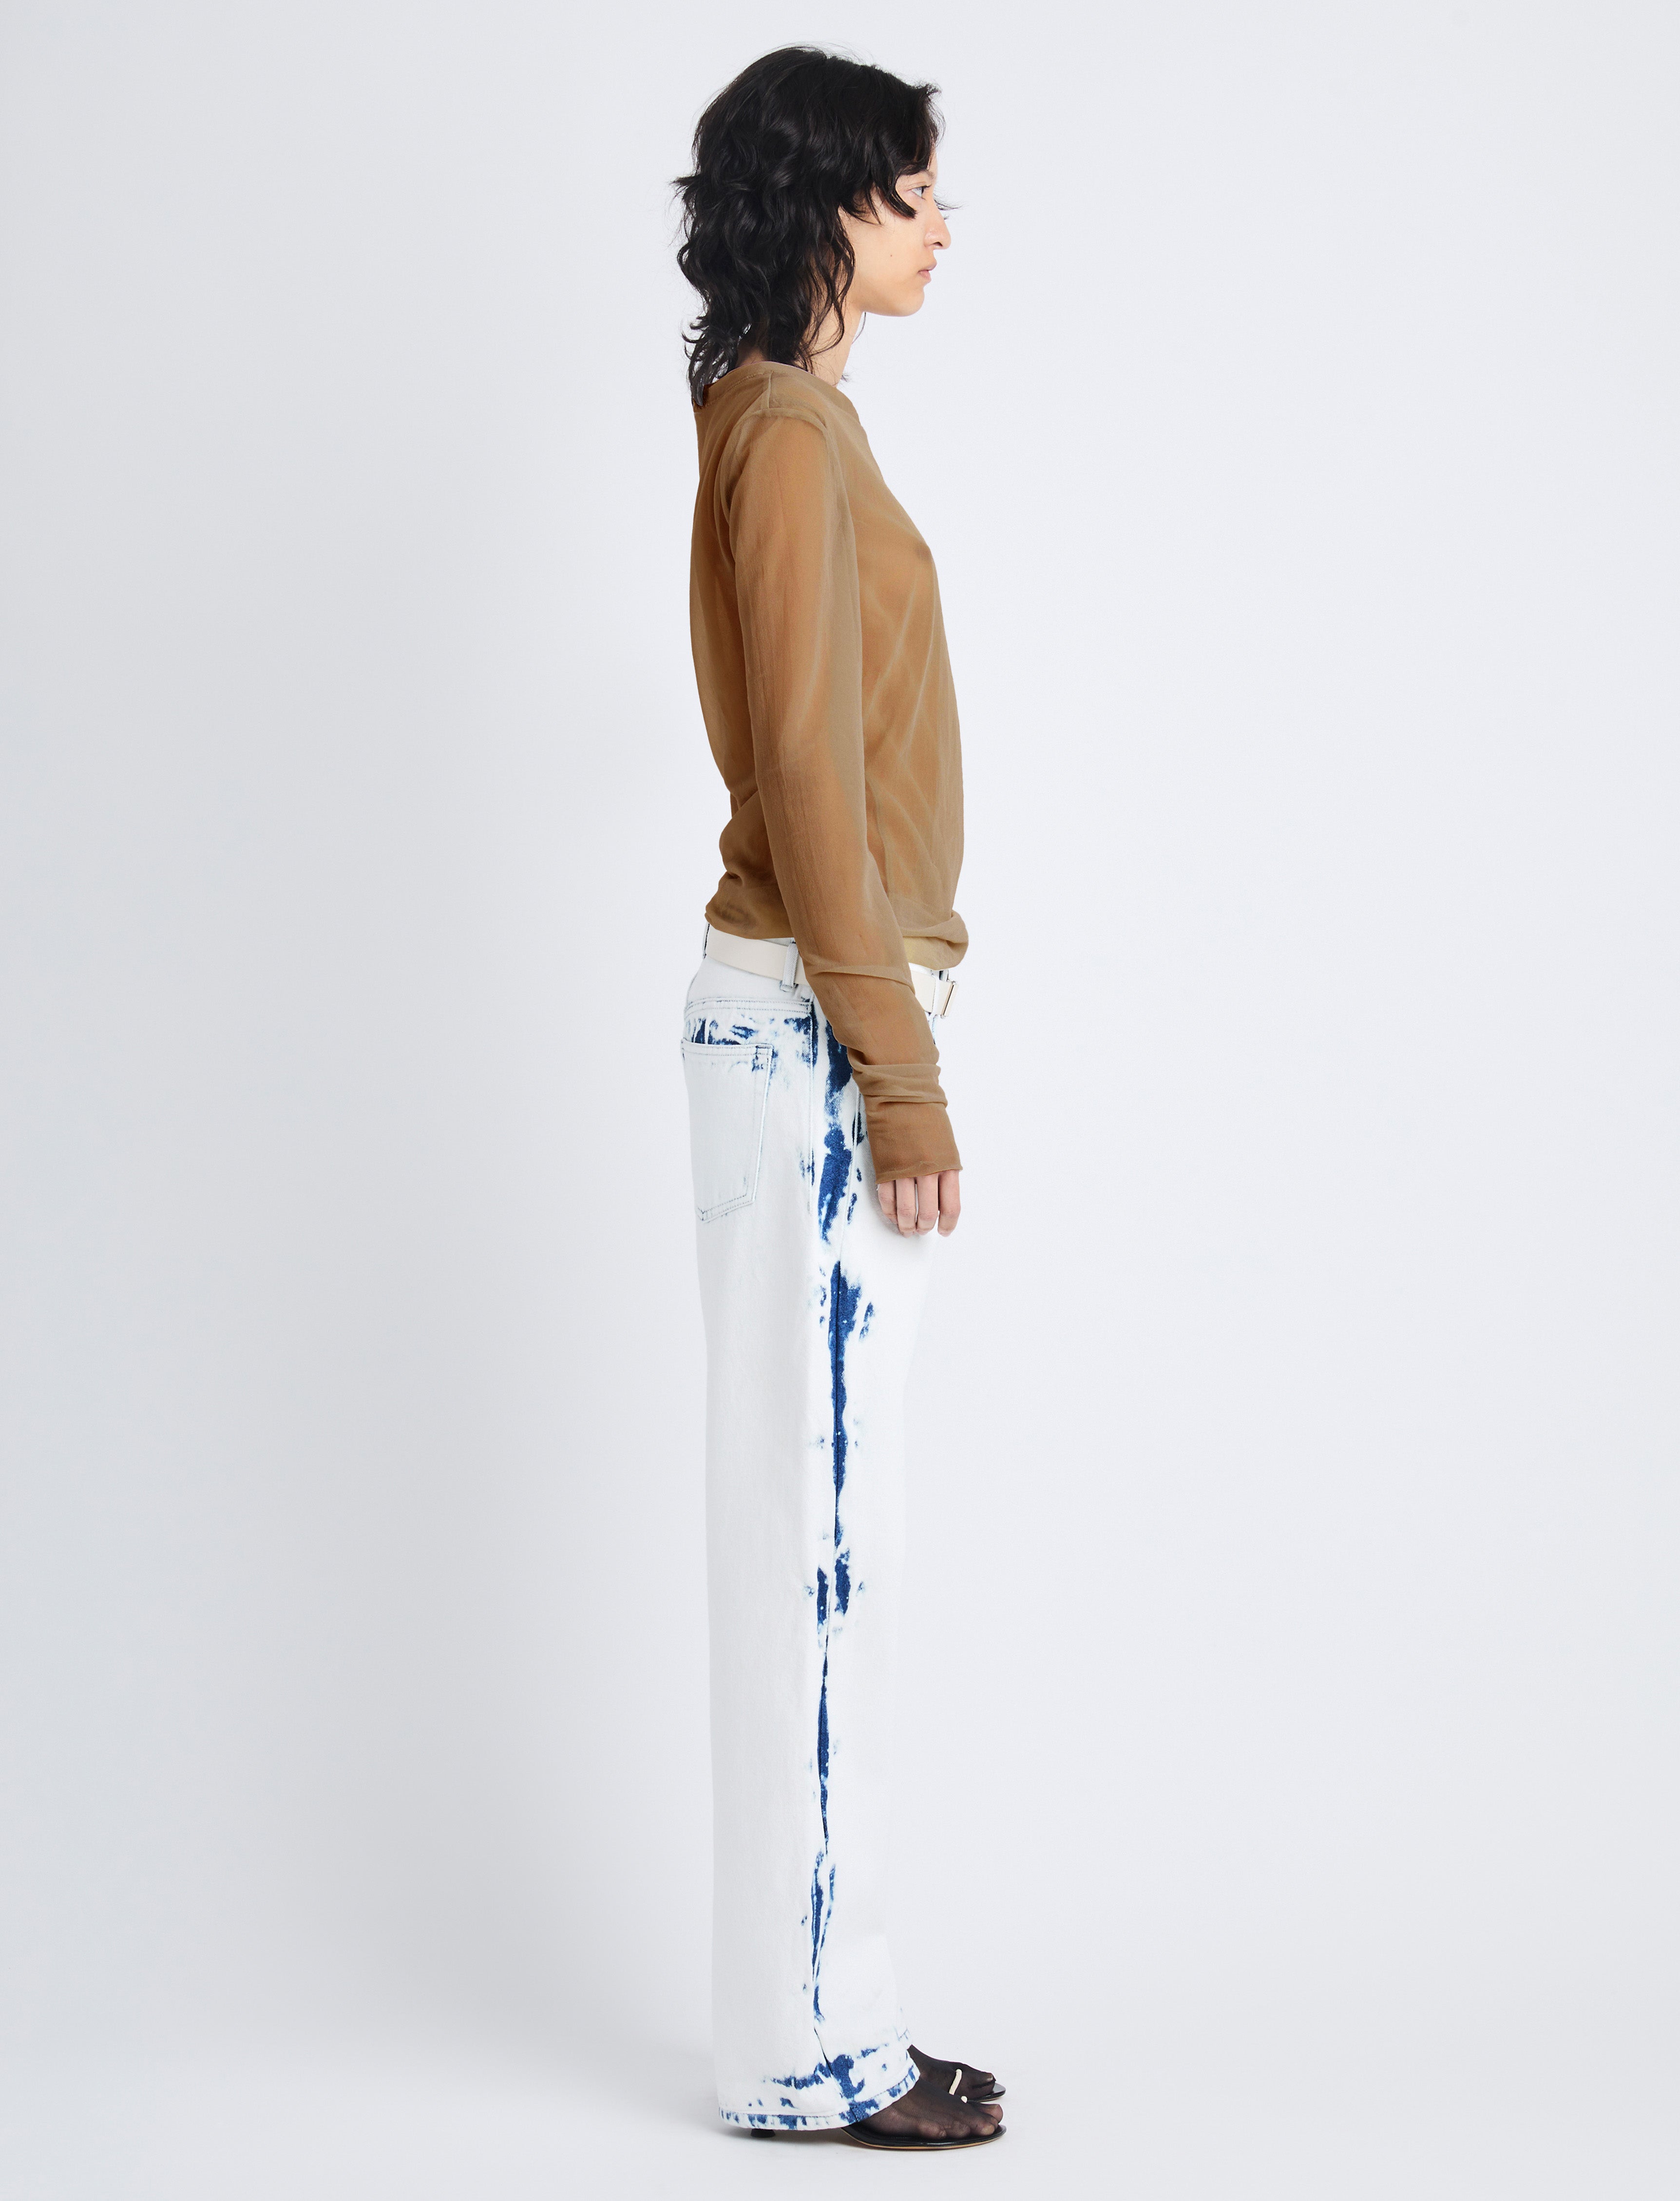 Dara Layered Top in Technical Nylon Jersey – Proenza Schouler